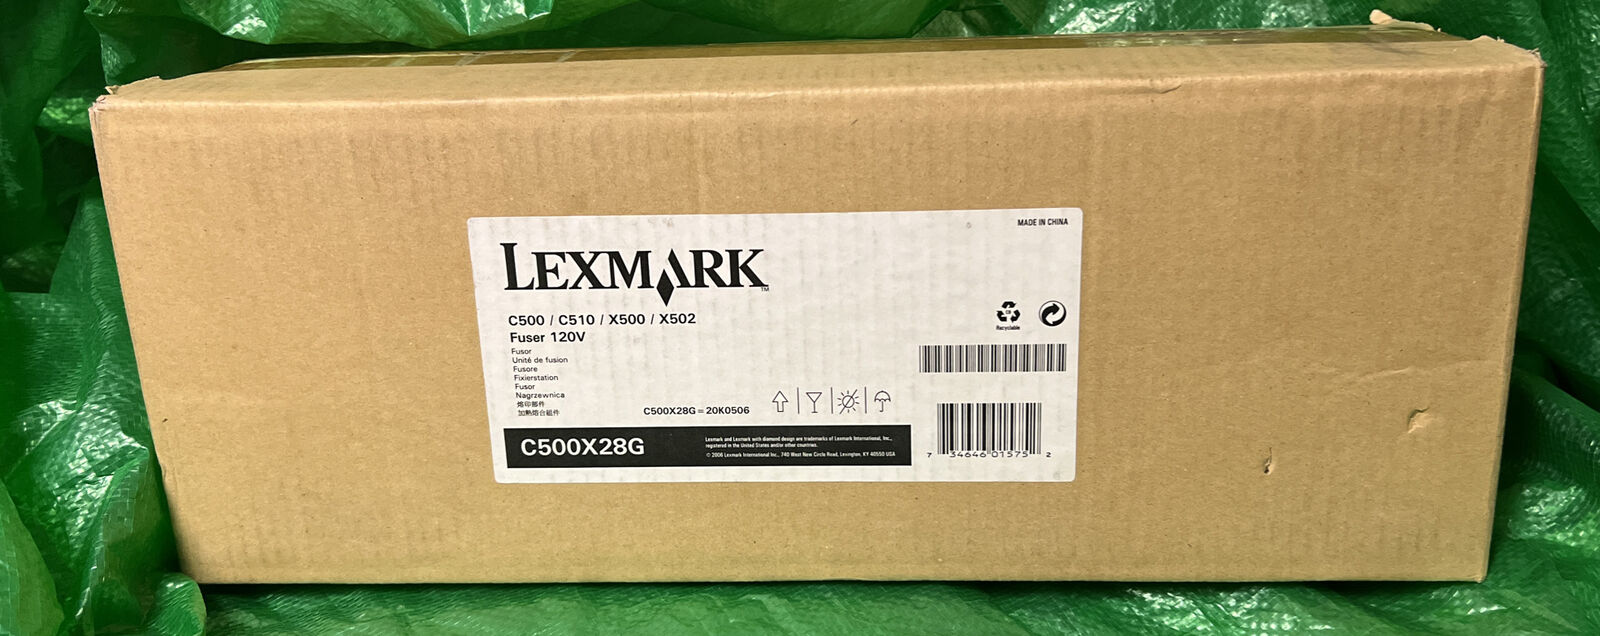 NEW GENUINE OEM Lexmark C500 C510 X500 X502 Fuser Unit C500X28G SEALED BOX